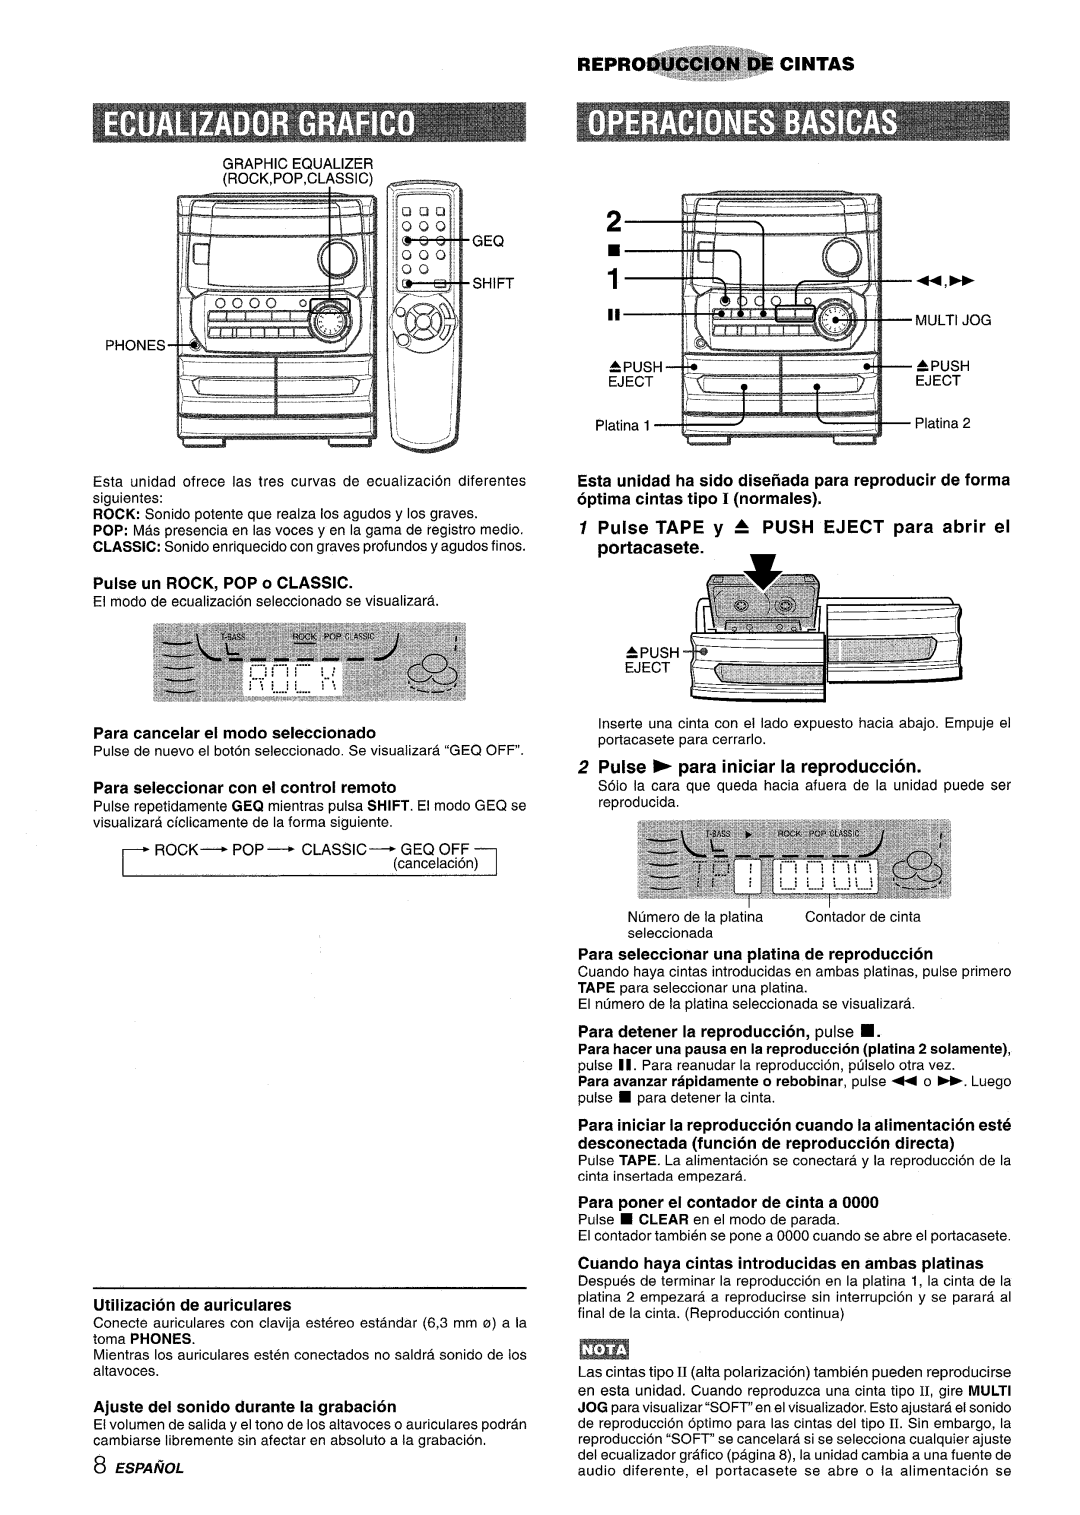 Aiwa CX-NA222 manual Pulse Tape y a Push Eject para abrir el, Pulse para iniciar la reproduction 